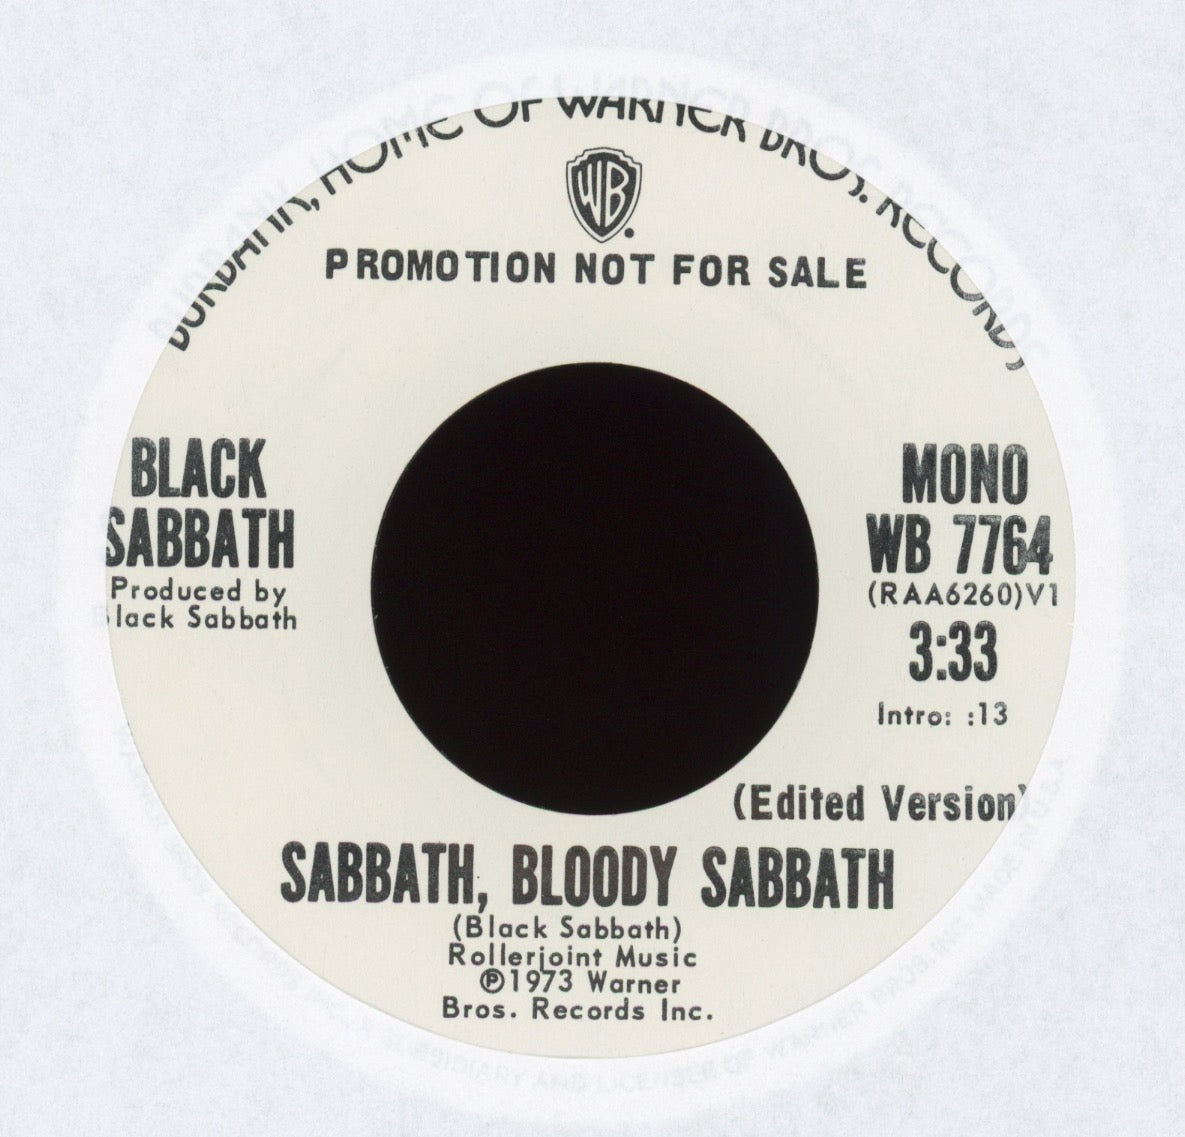 Black Sabbath - Sabbath, Bloody Sabbath on Warner Bros Promo